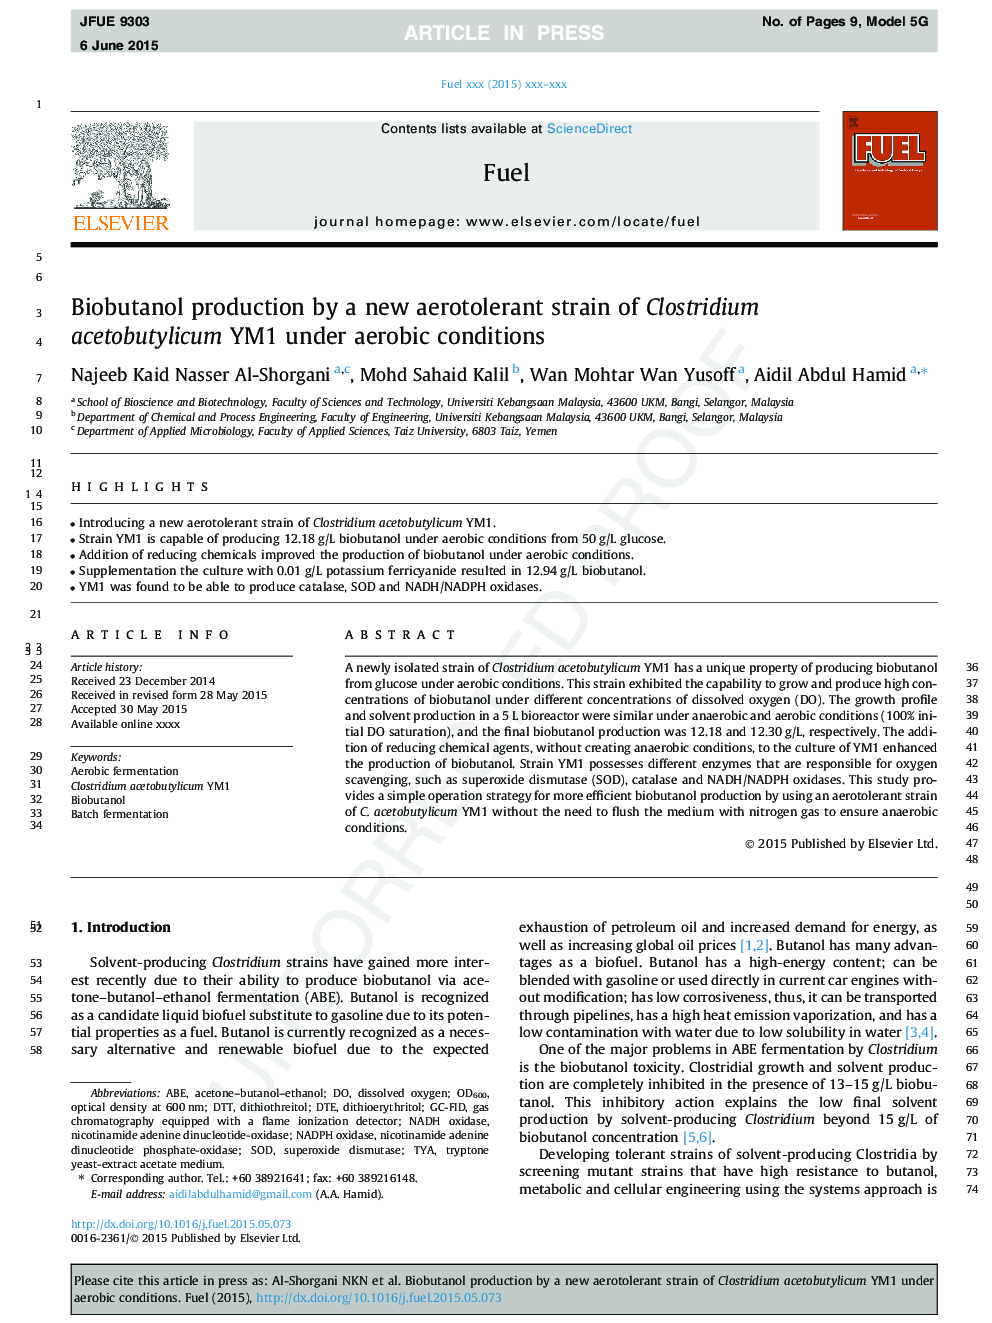 Biobutanol production by a new aerotolerant strain of Clostridium acetobutylicum YM1 under aerobic conditions